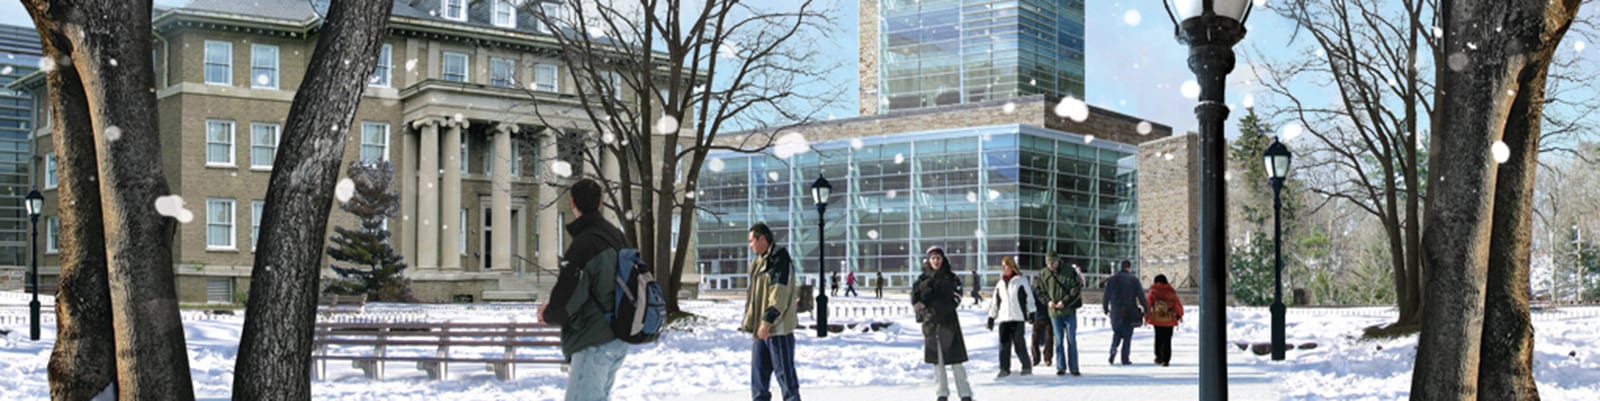 Rendering of people on campus in winter.